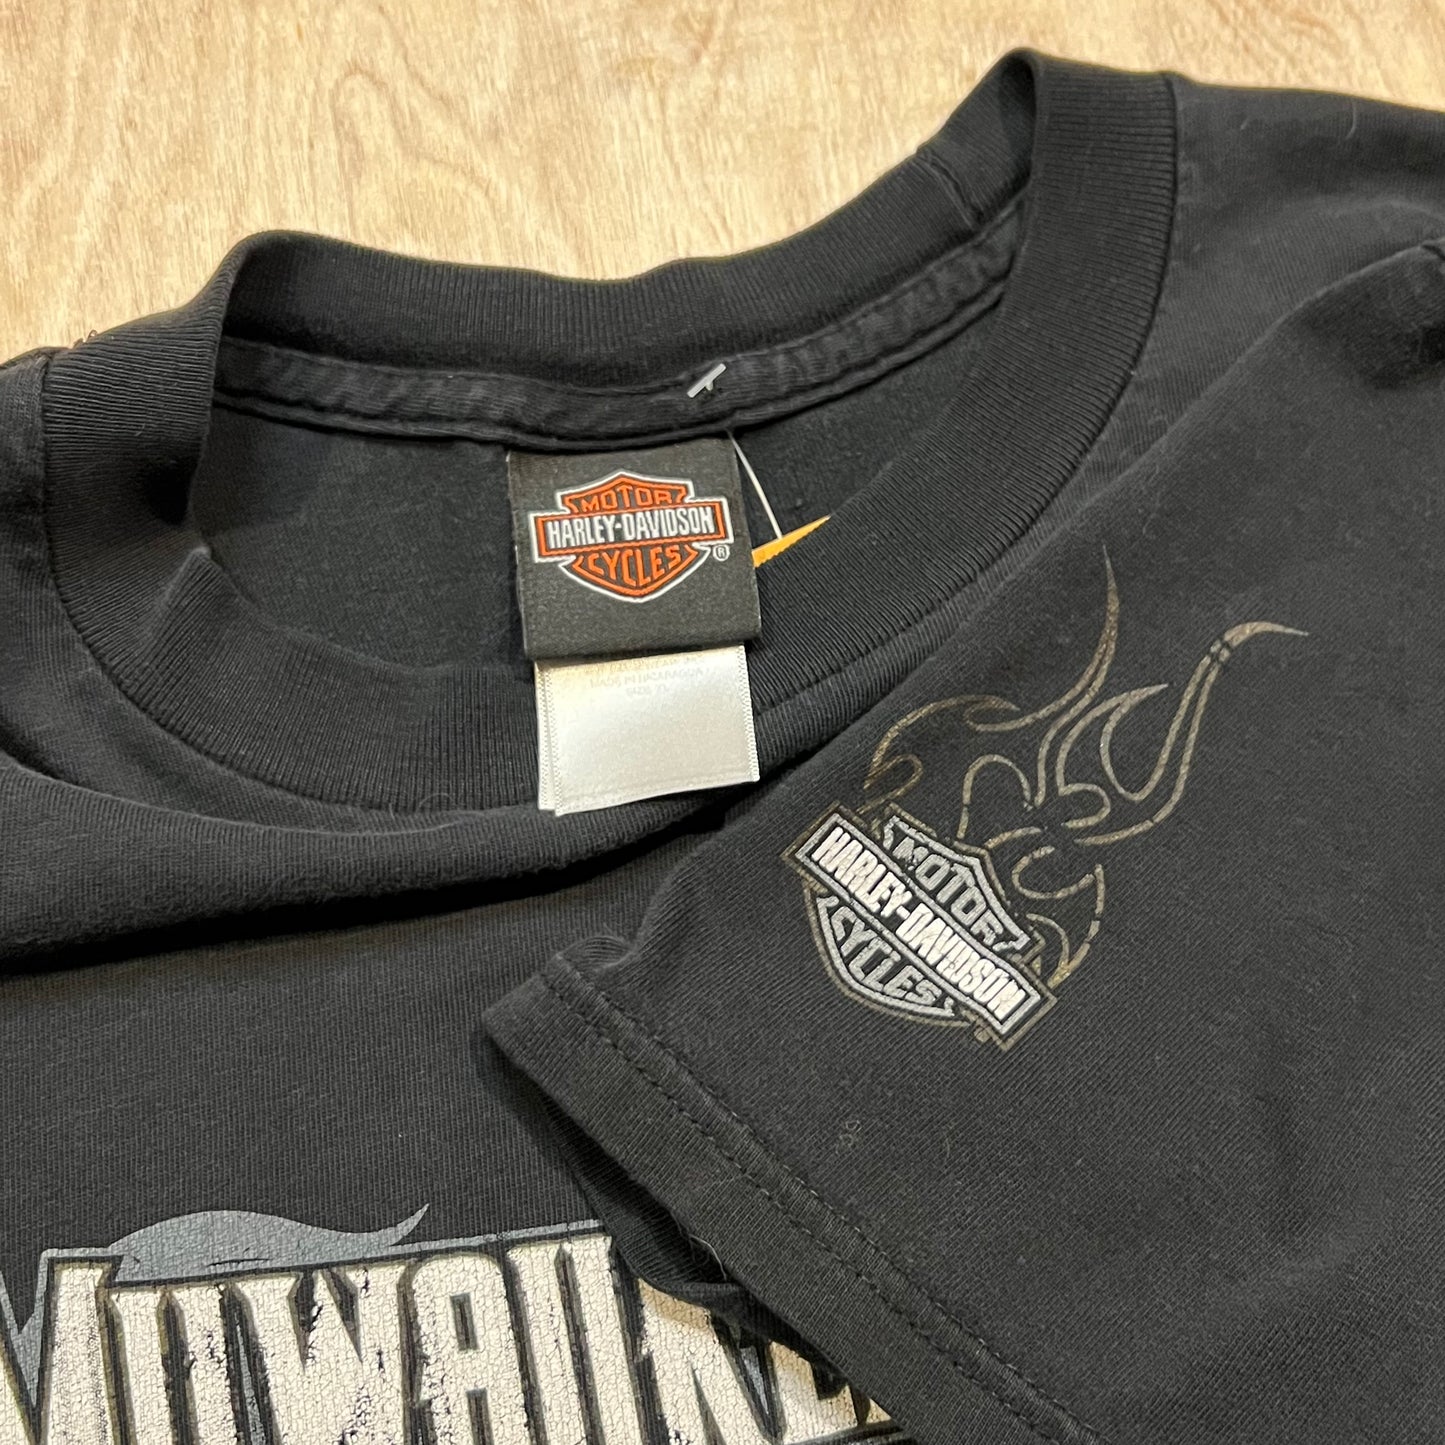 Harley Davidson Milwaukee Brewers T-Shirt